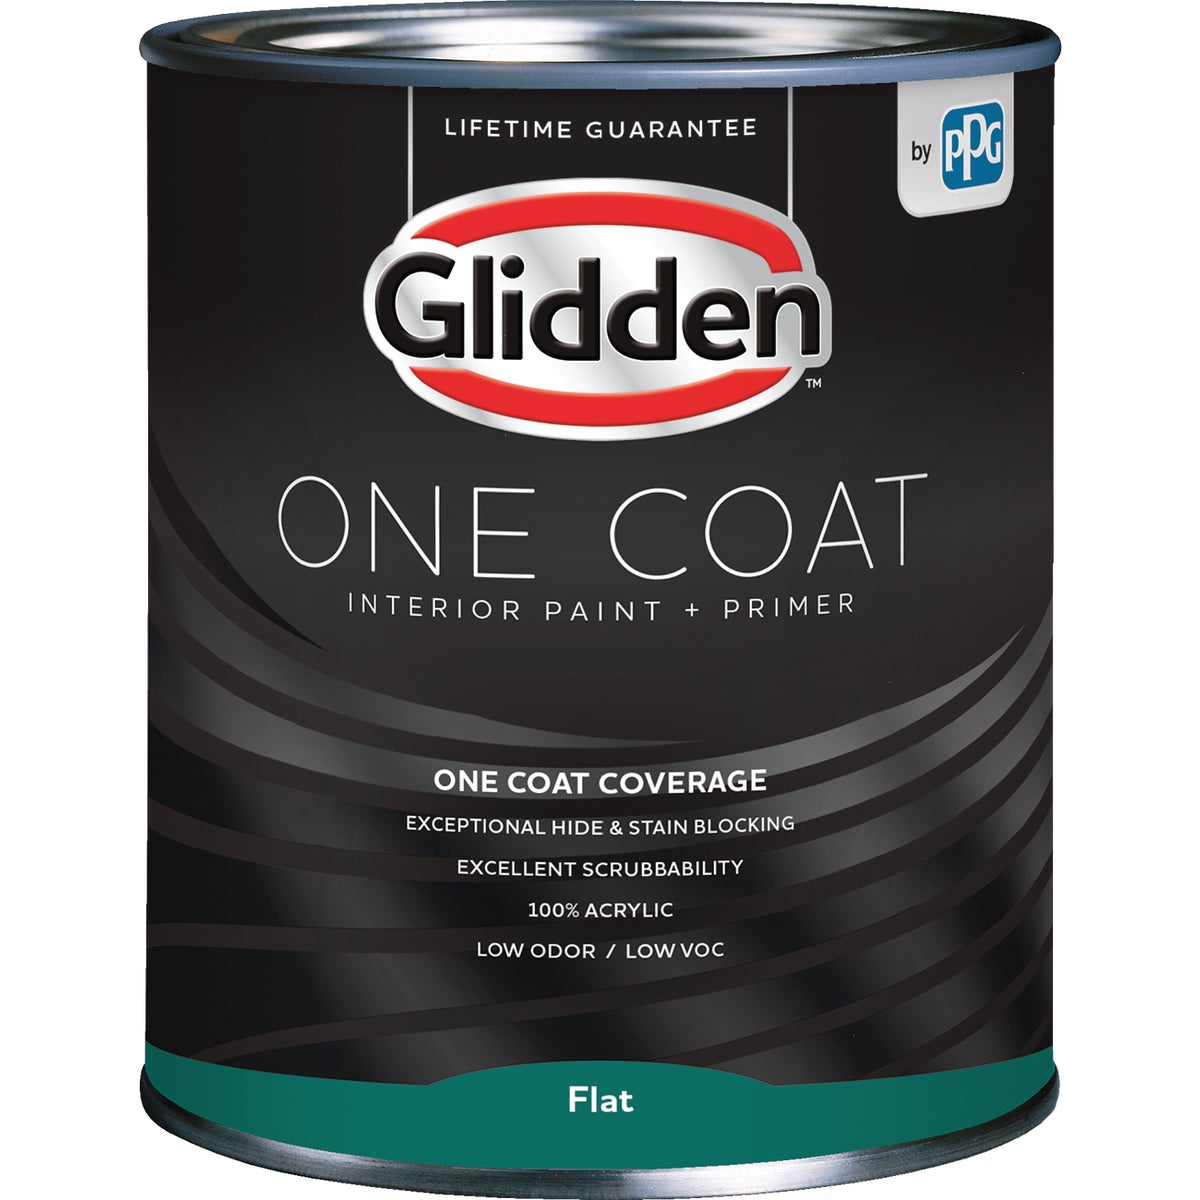 Glidden One Coat Interior Paint + Primer Flat Midtone Base Quart